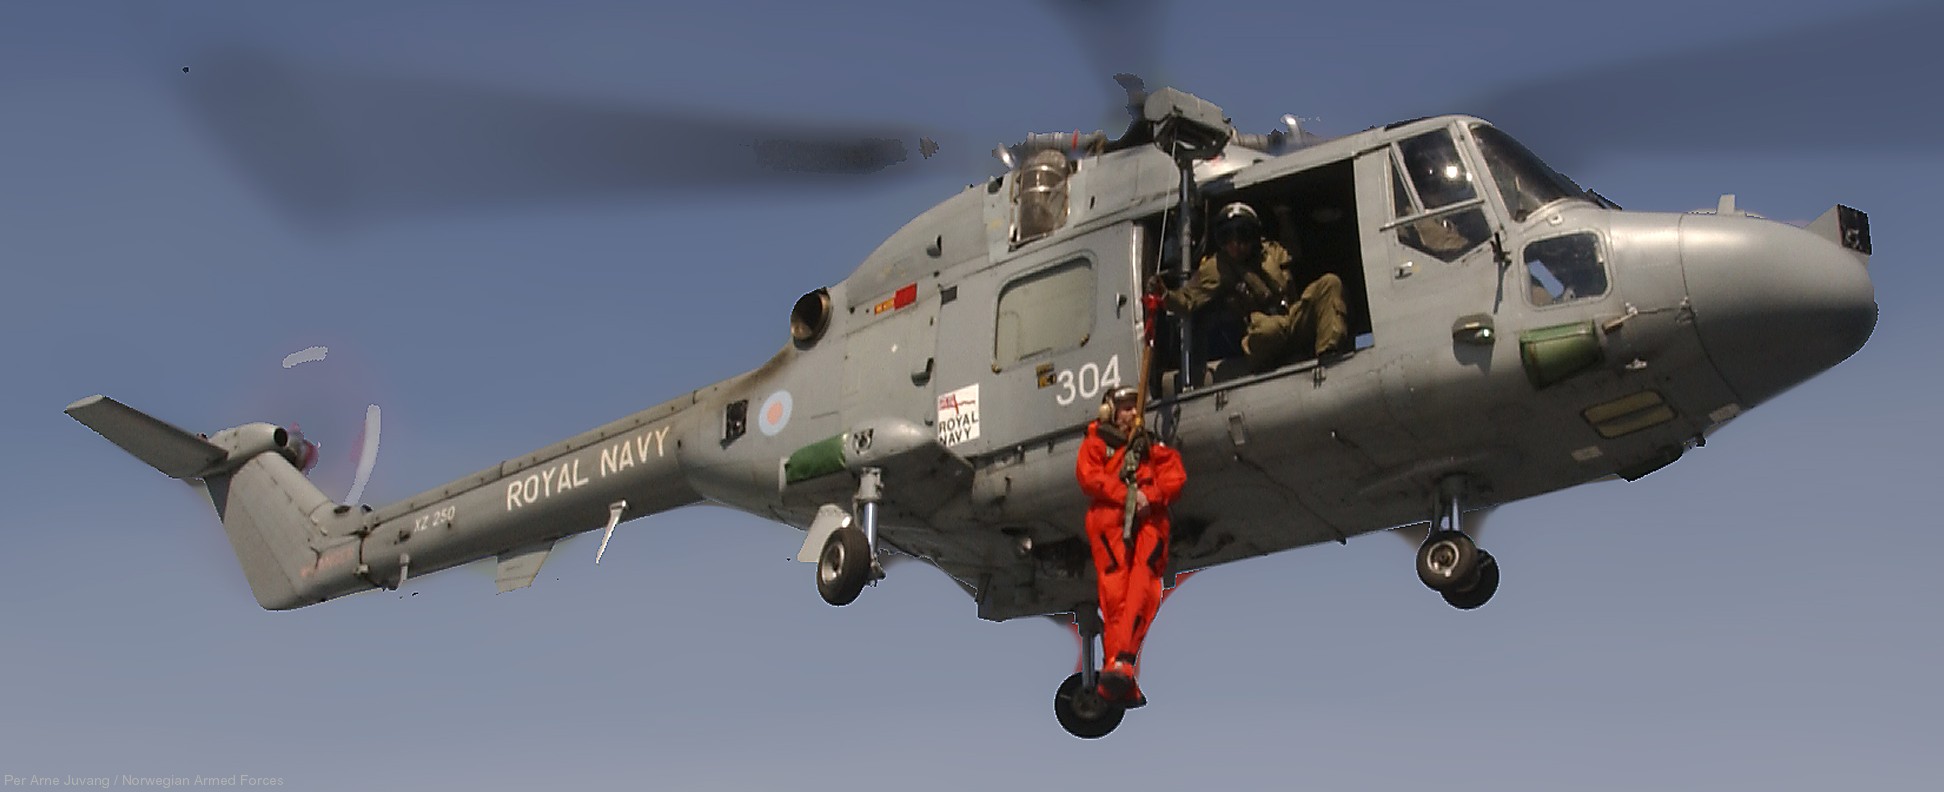 lynx has.3 naval helicopter royal navy westland nas squadron rnas 07